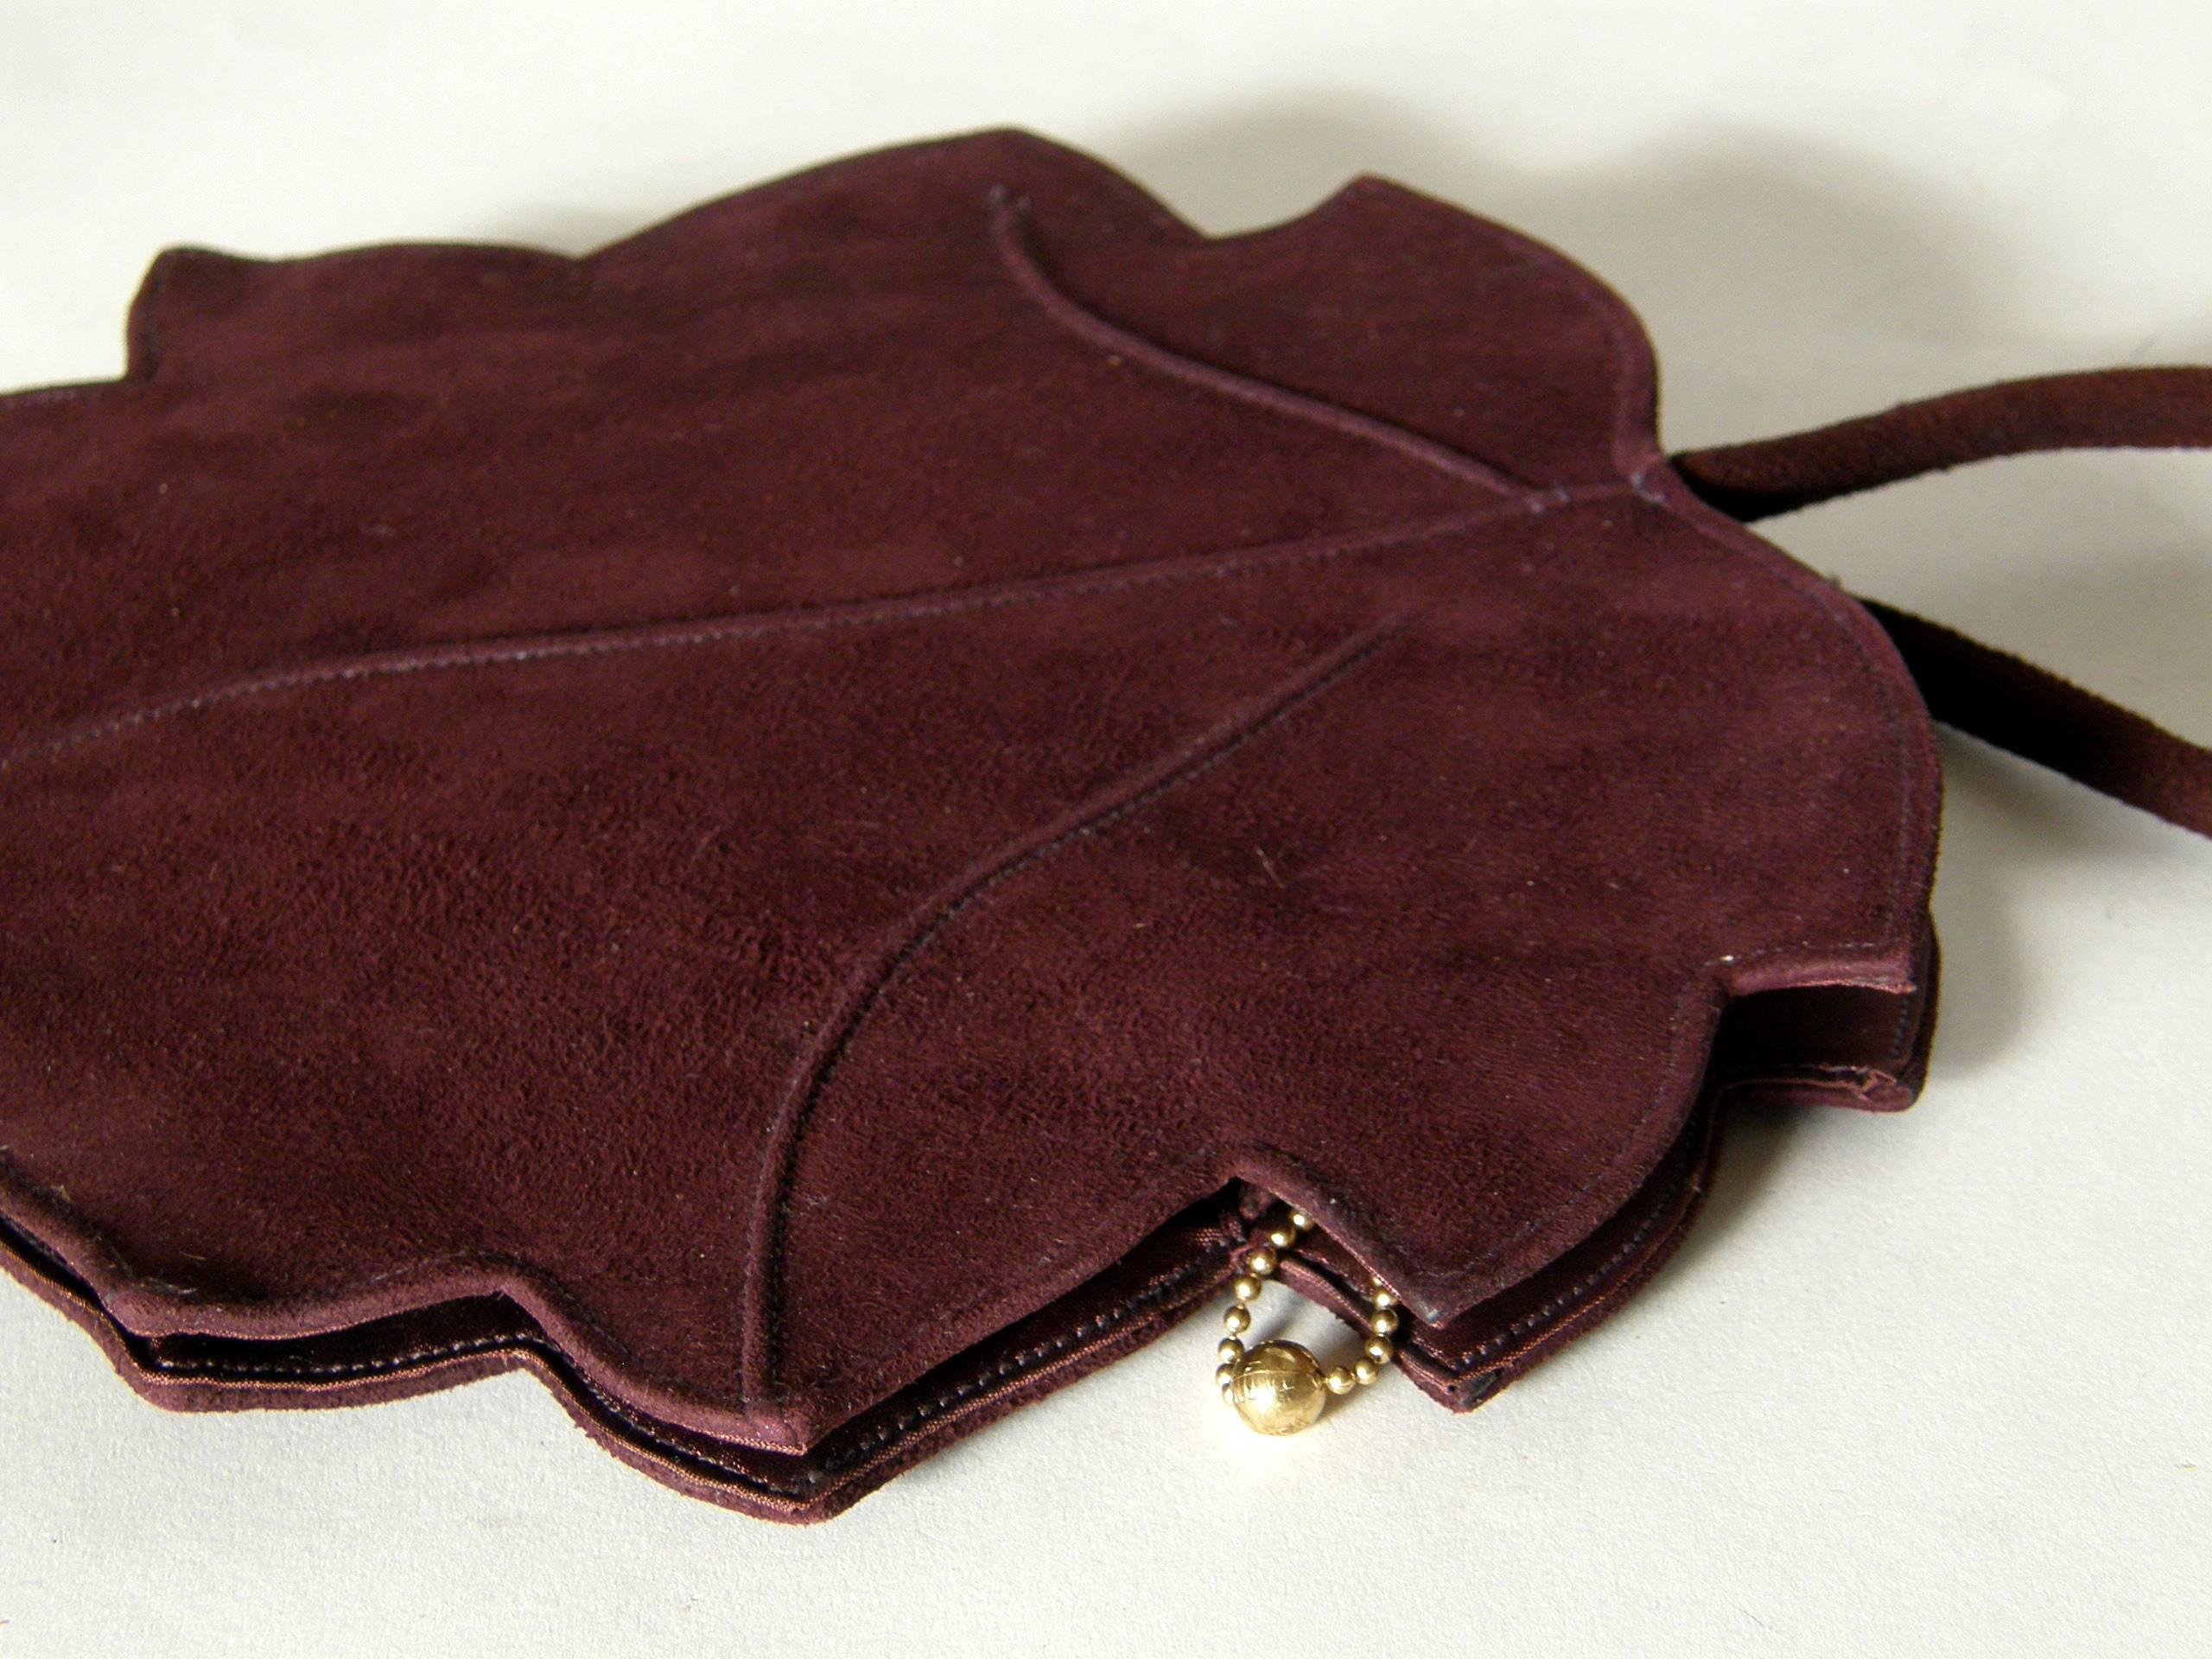 Black Curvaceous Falling Leaf Shaped Handbag in Aubergine Colored Suede